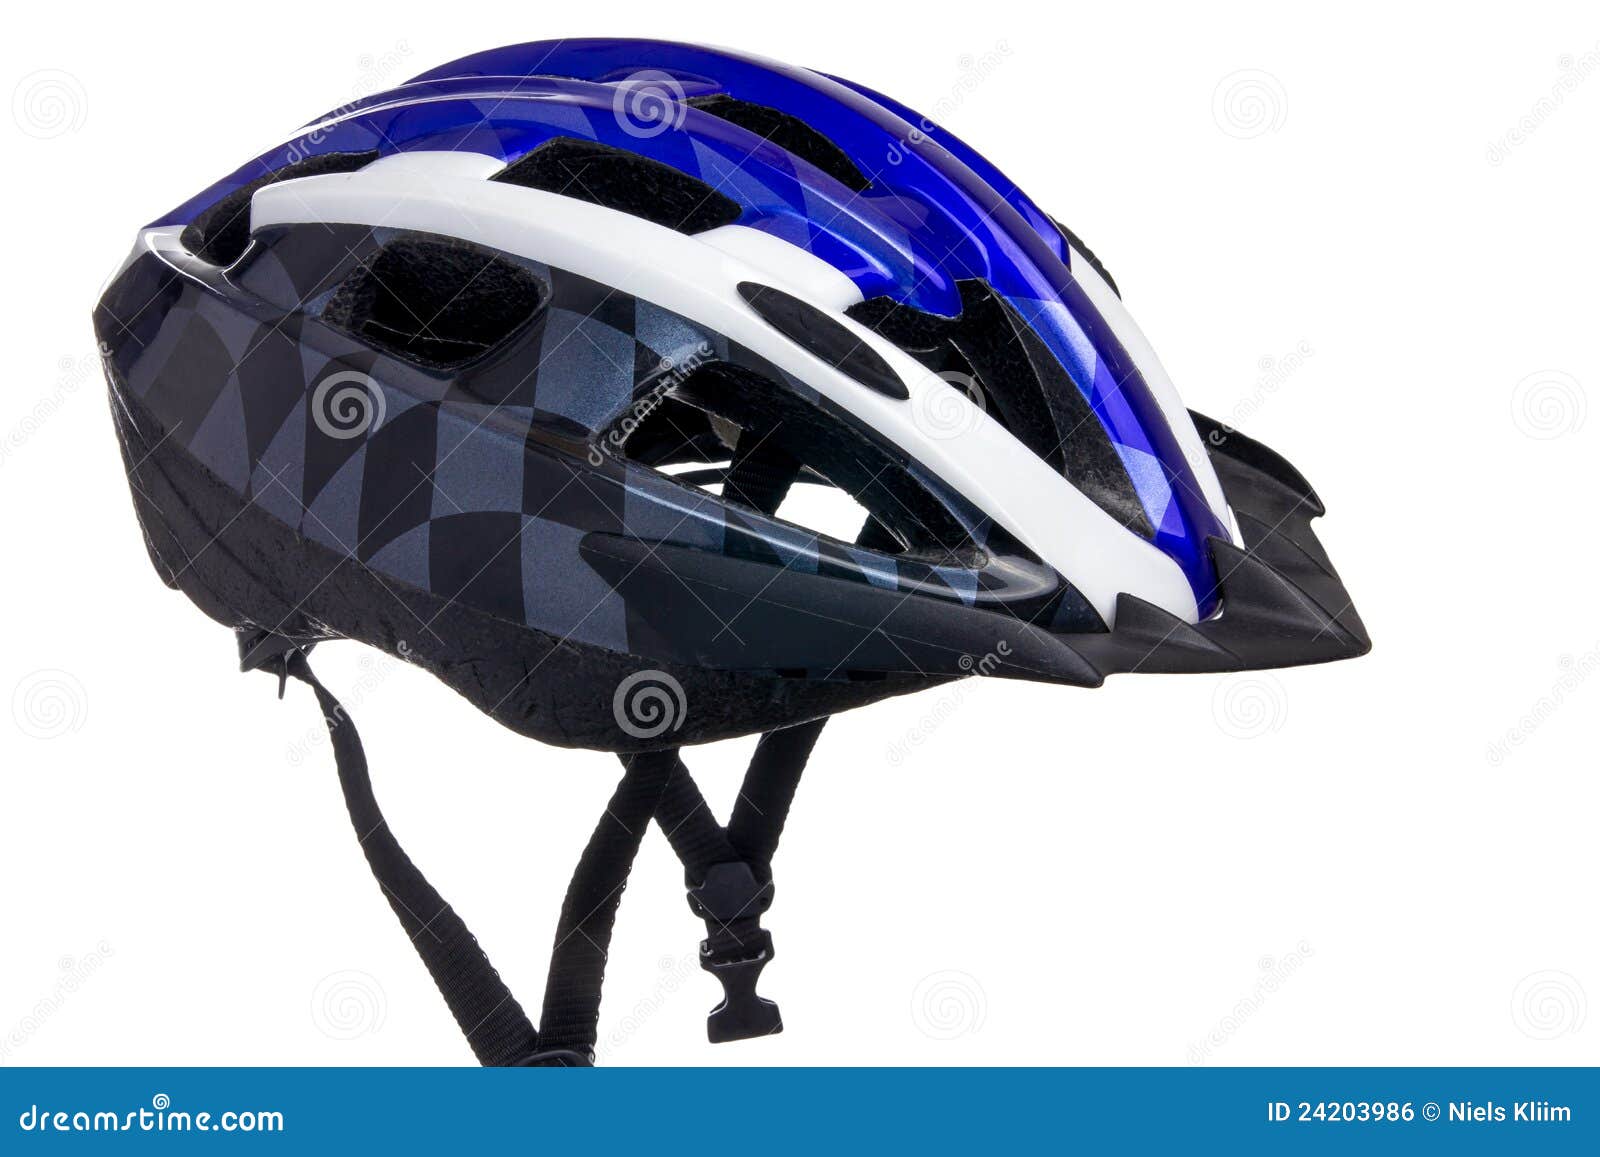 bike helmet clip art - photo #39